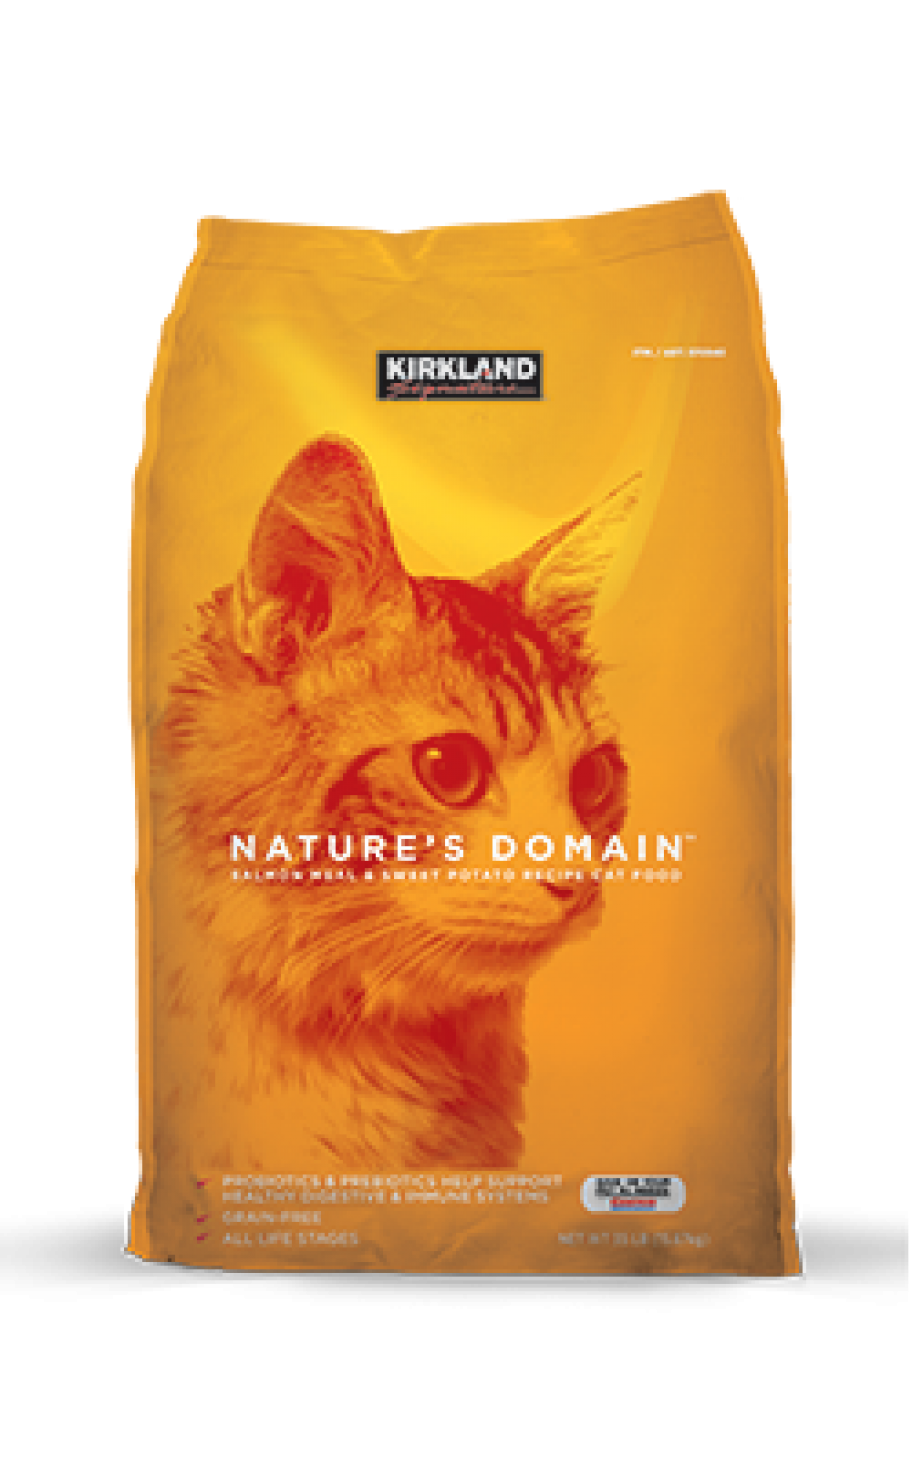 Kirkland Signature Nature's Domain Pet Food Reviews (Australia)